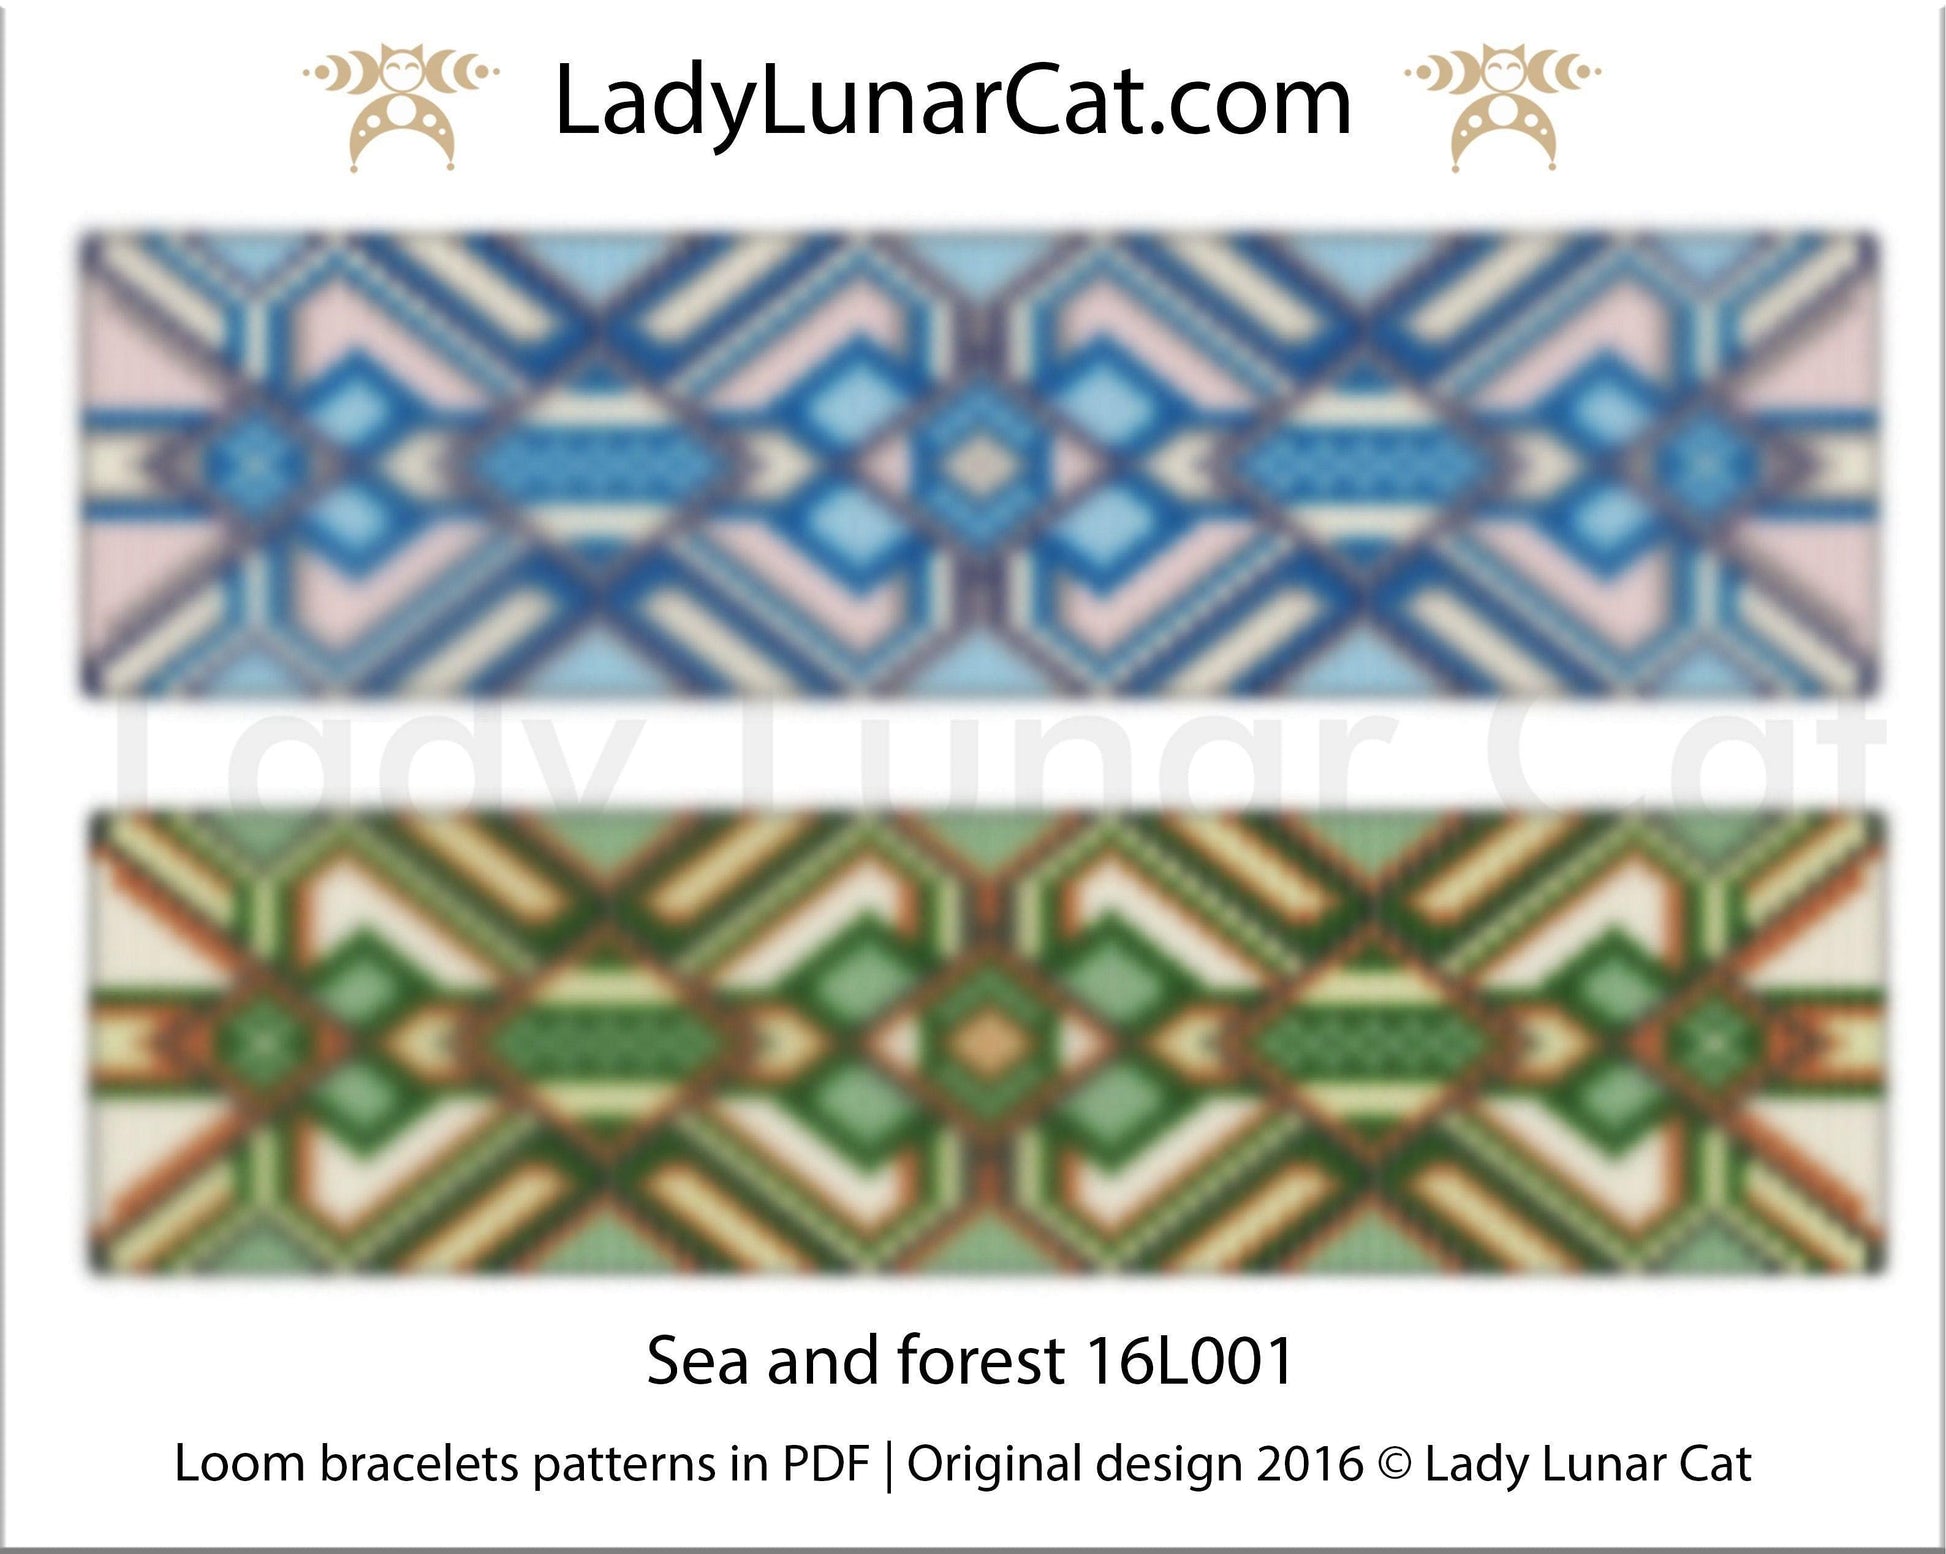 Bead loom pattern for bracelets - Sea and forest 16L001 LadyLunarCat